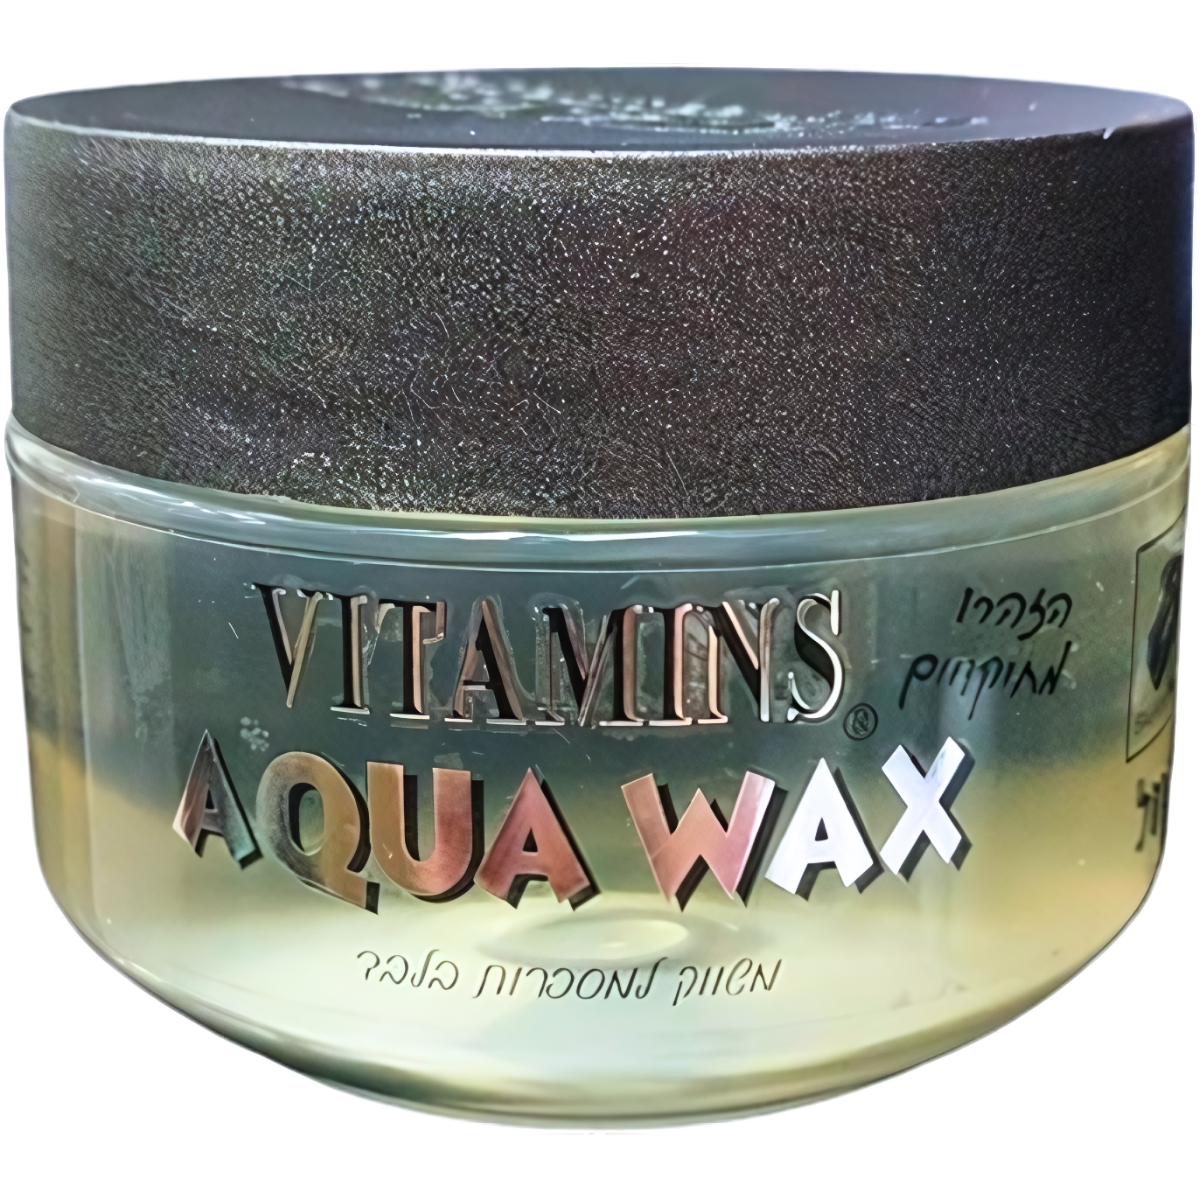 ווקס לשיער AQUA WAX על בסיס מים 250 מ"ל ויטמינס